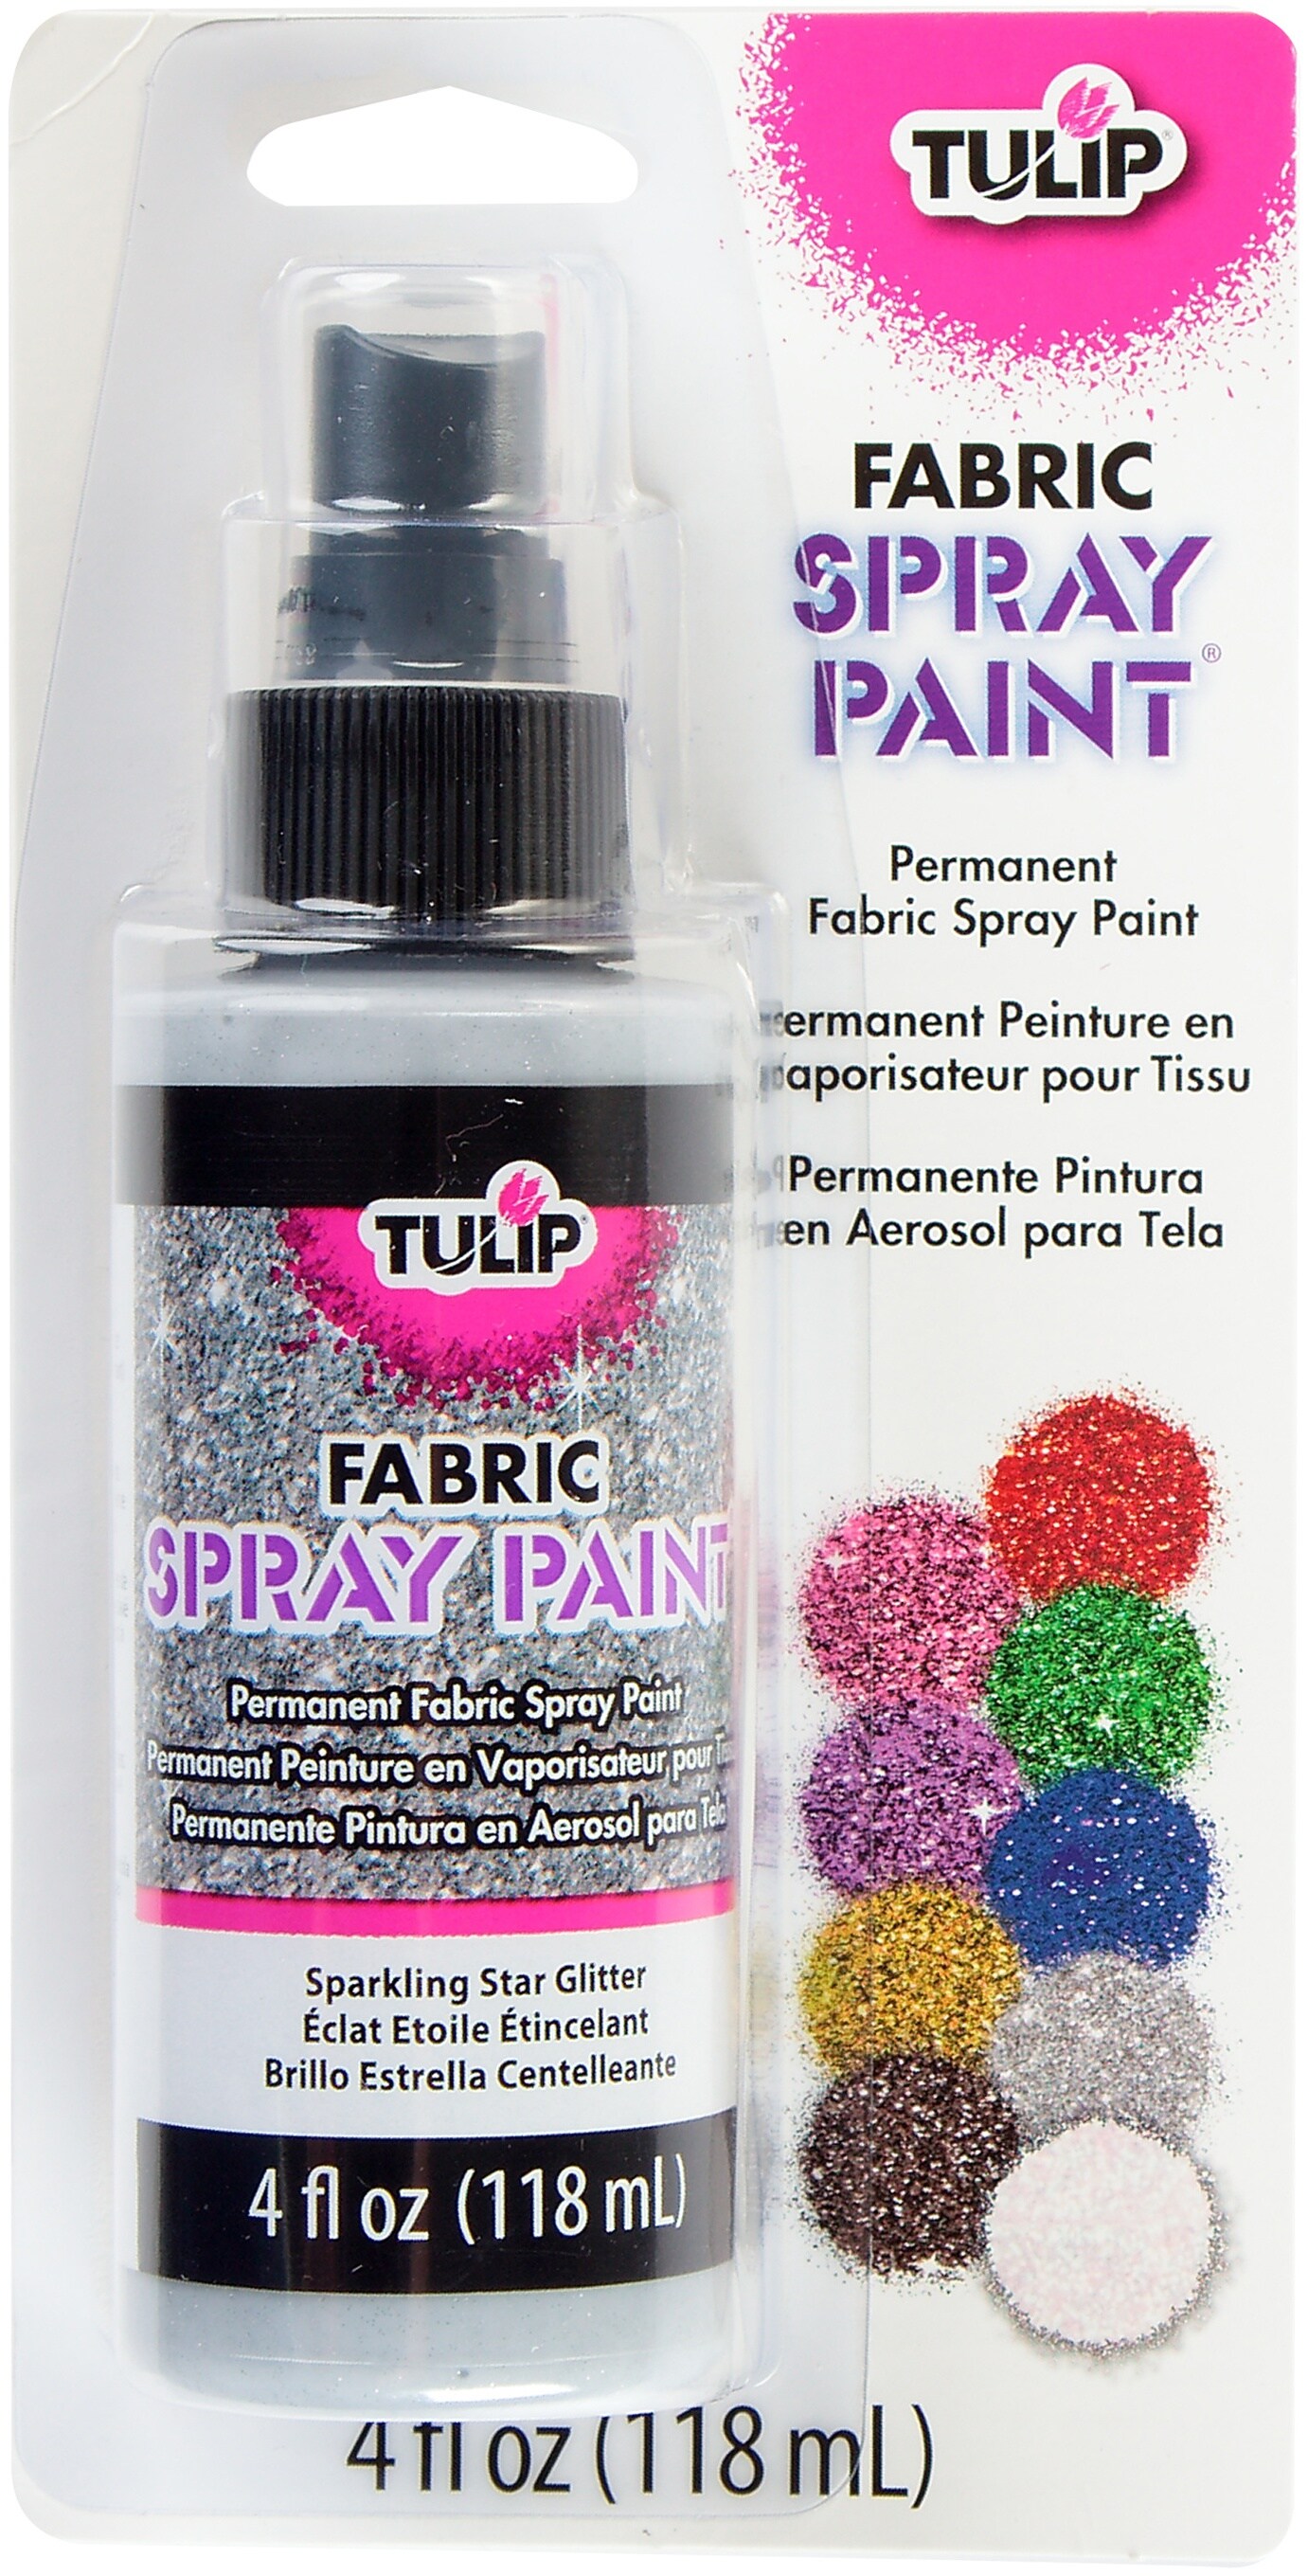 Tulip Fabric Spray Paint Pink Diamond Glitter 4 OZ New And Sealed Htf Rare